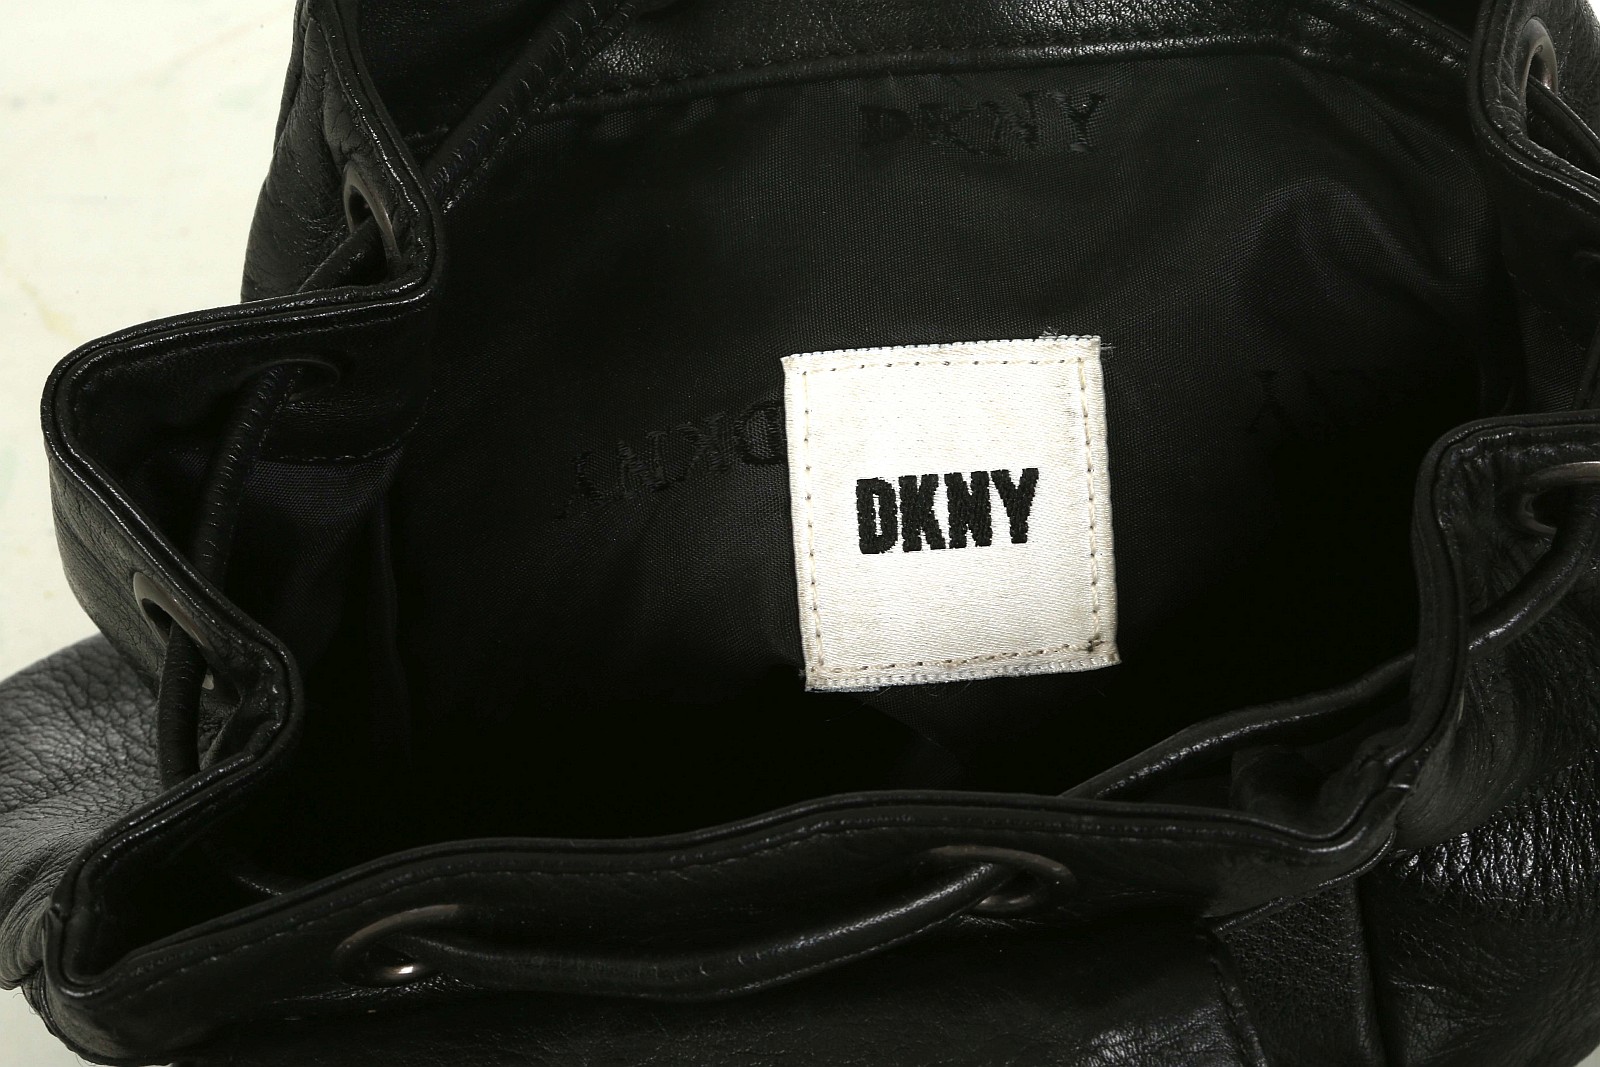 DKNY MINI BACKPACK, black leather, 23cm high, 17cm - Image 2 of 5